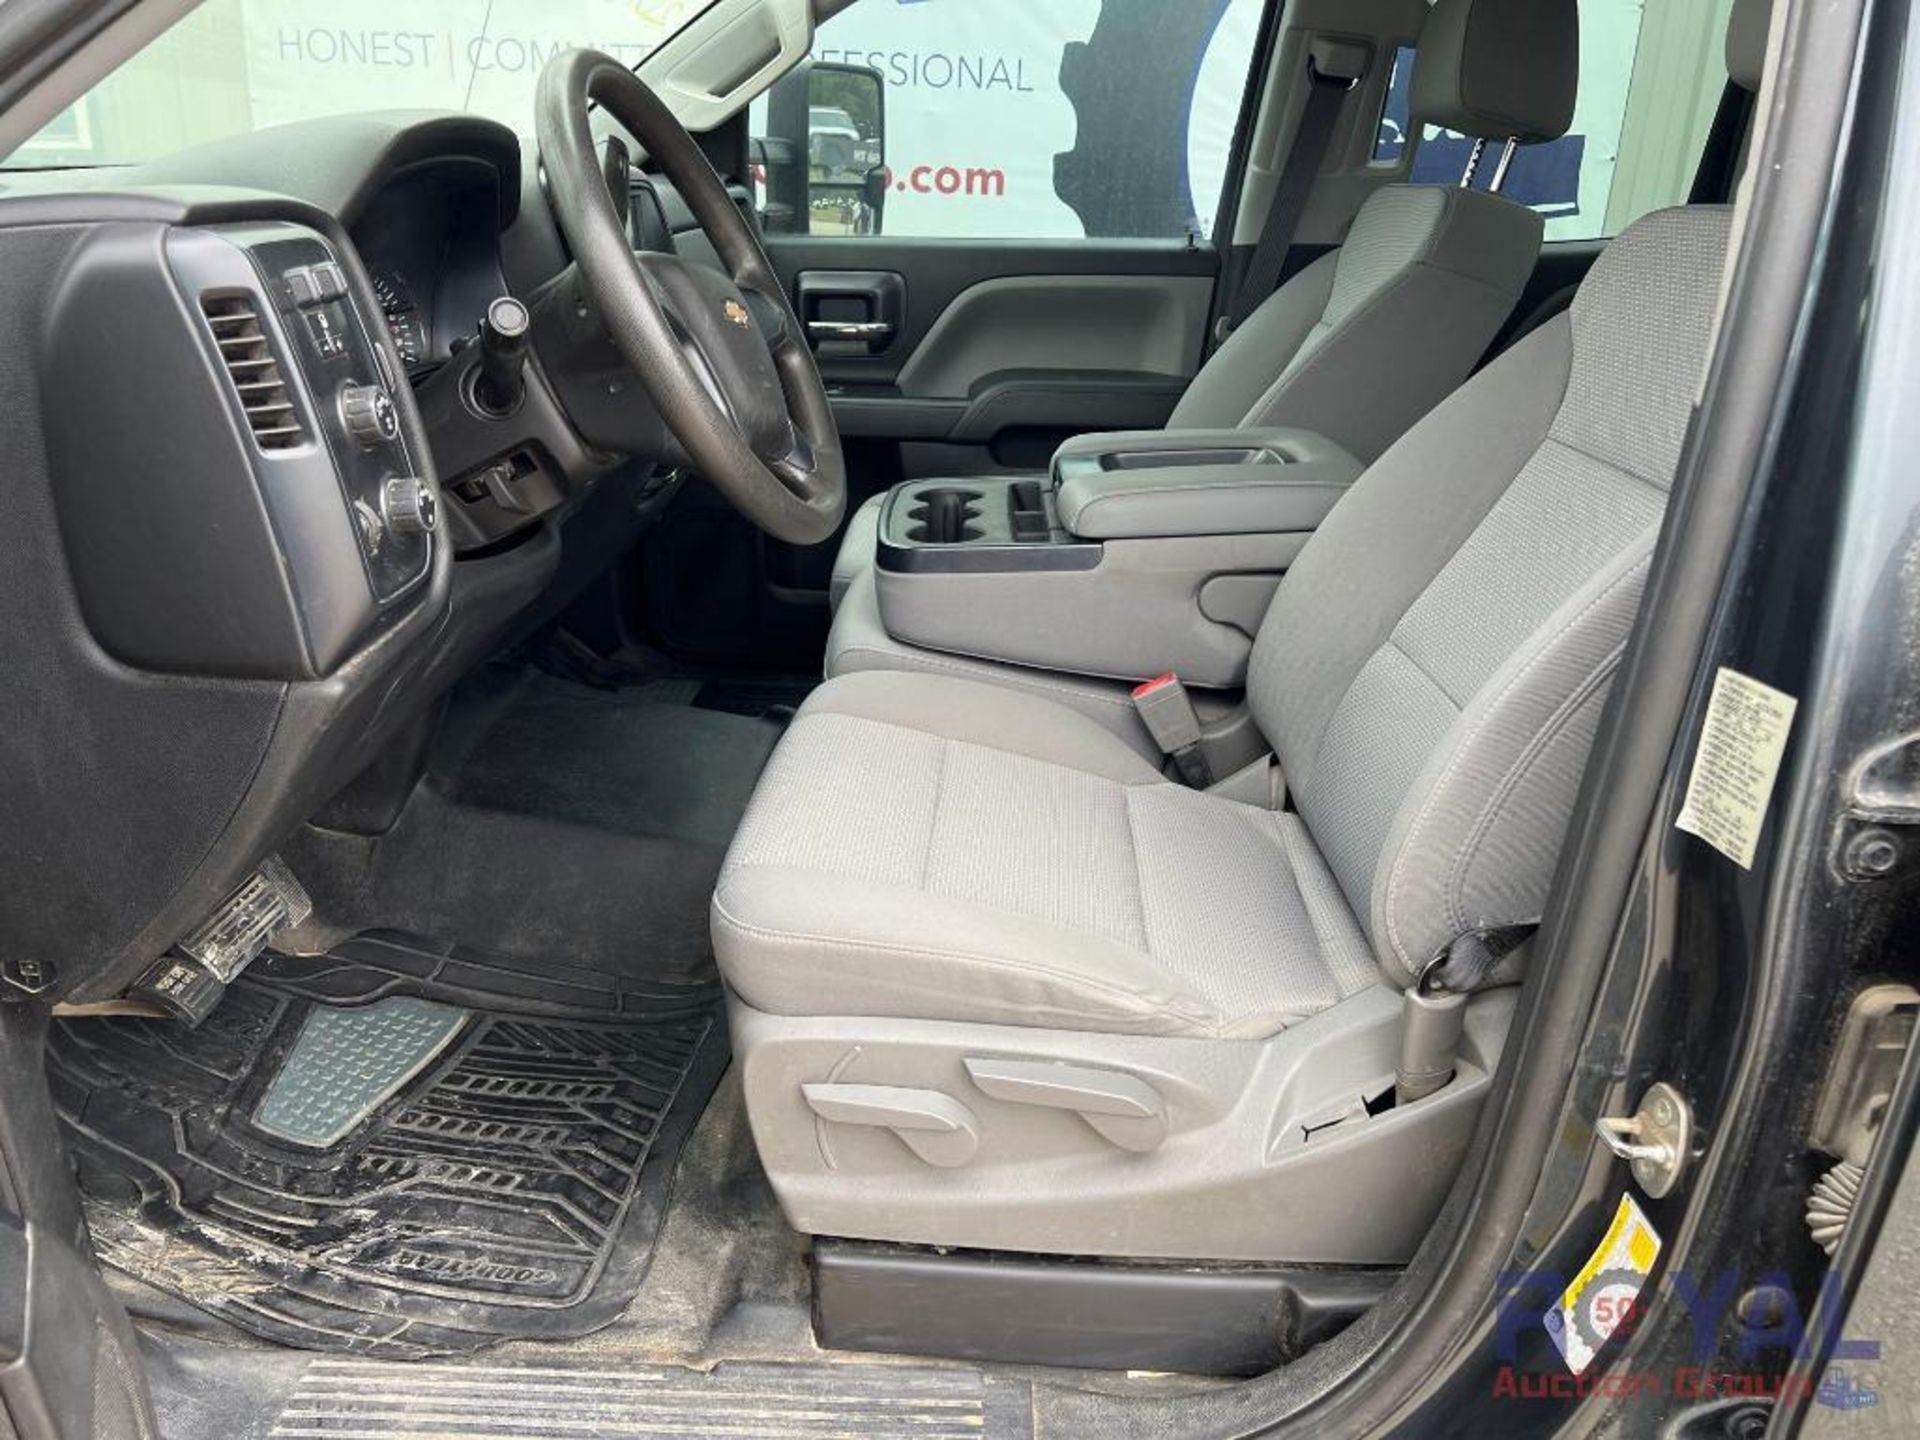 2018 Chevrolet Silverado 4x4 Crew Cab Pickup Truck - Image 17 of 51